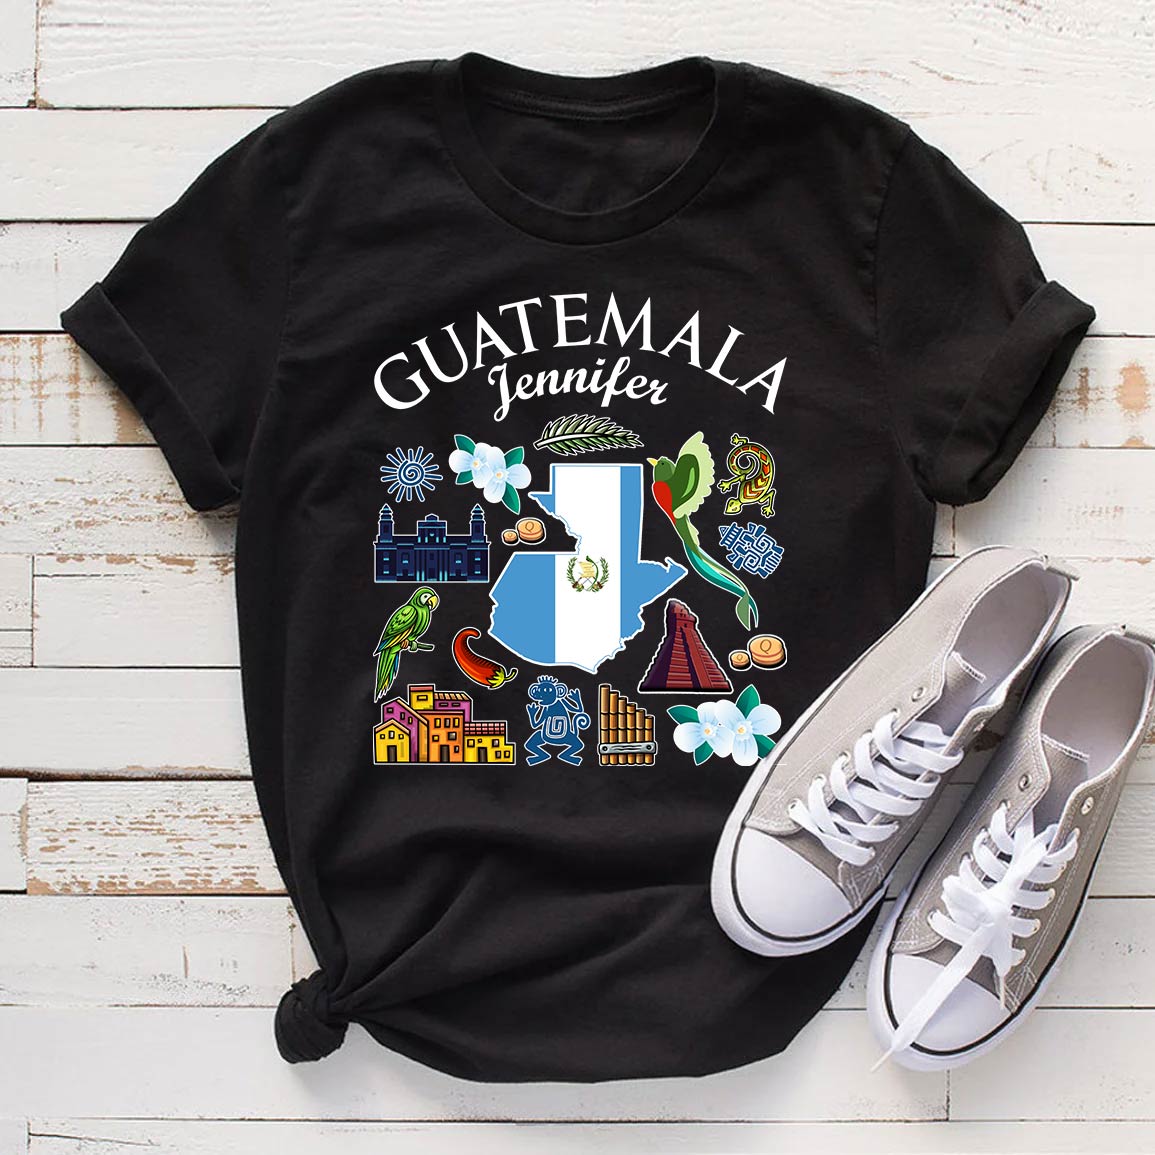 Customized Guatemala T-shirt With Symbols And Name